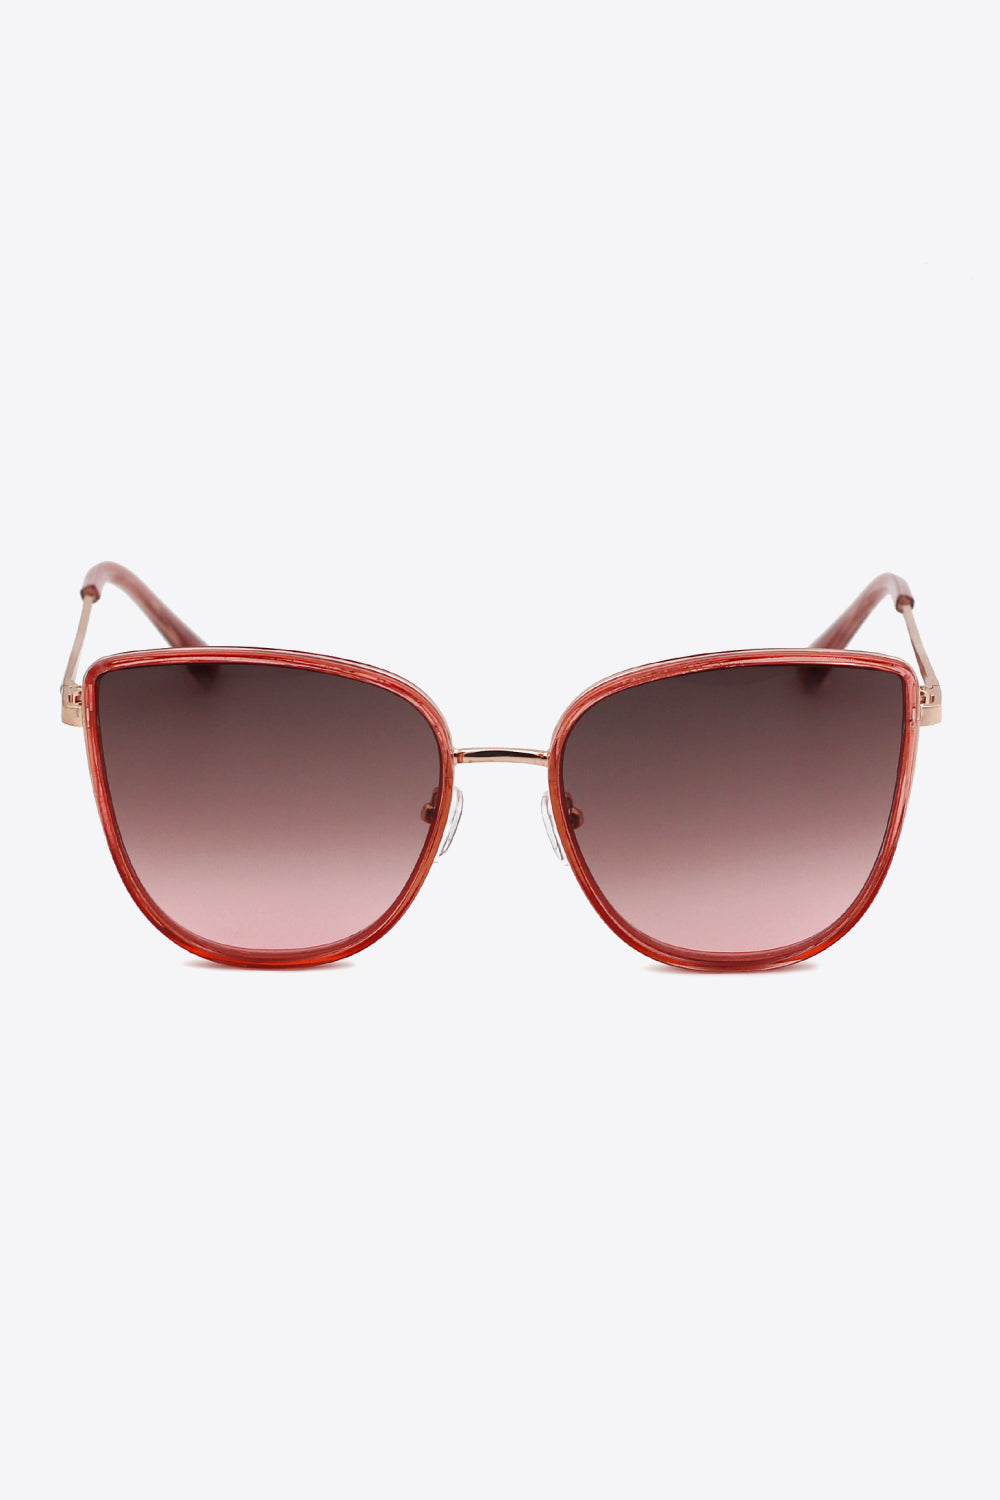 Uylee’s Boutique Full Rim Metal-Plastic Hybrid Frame Sunglasses